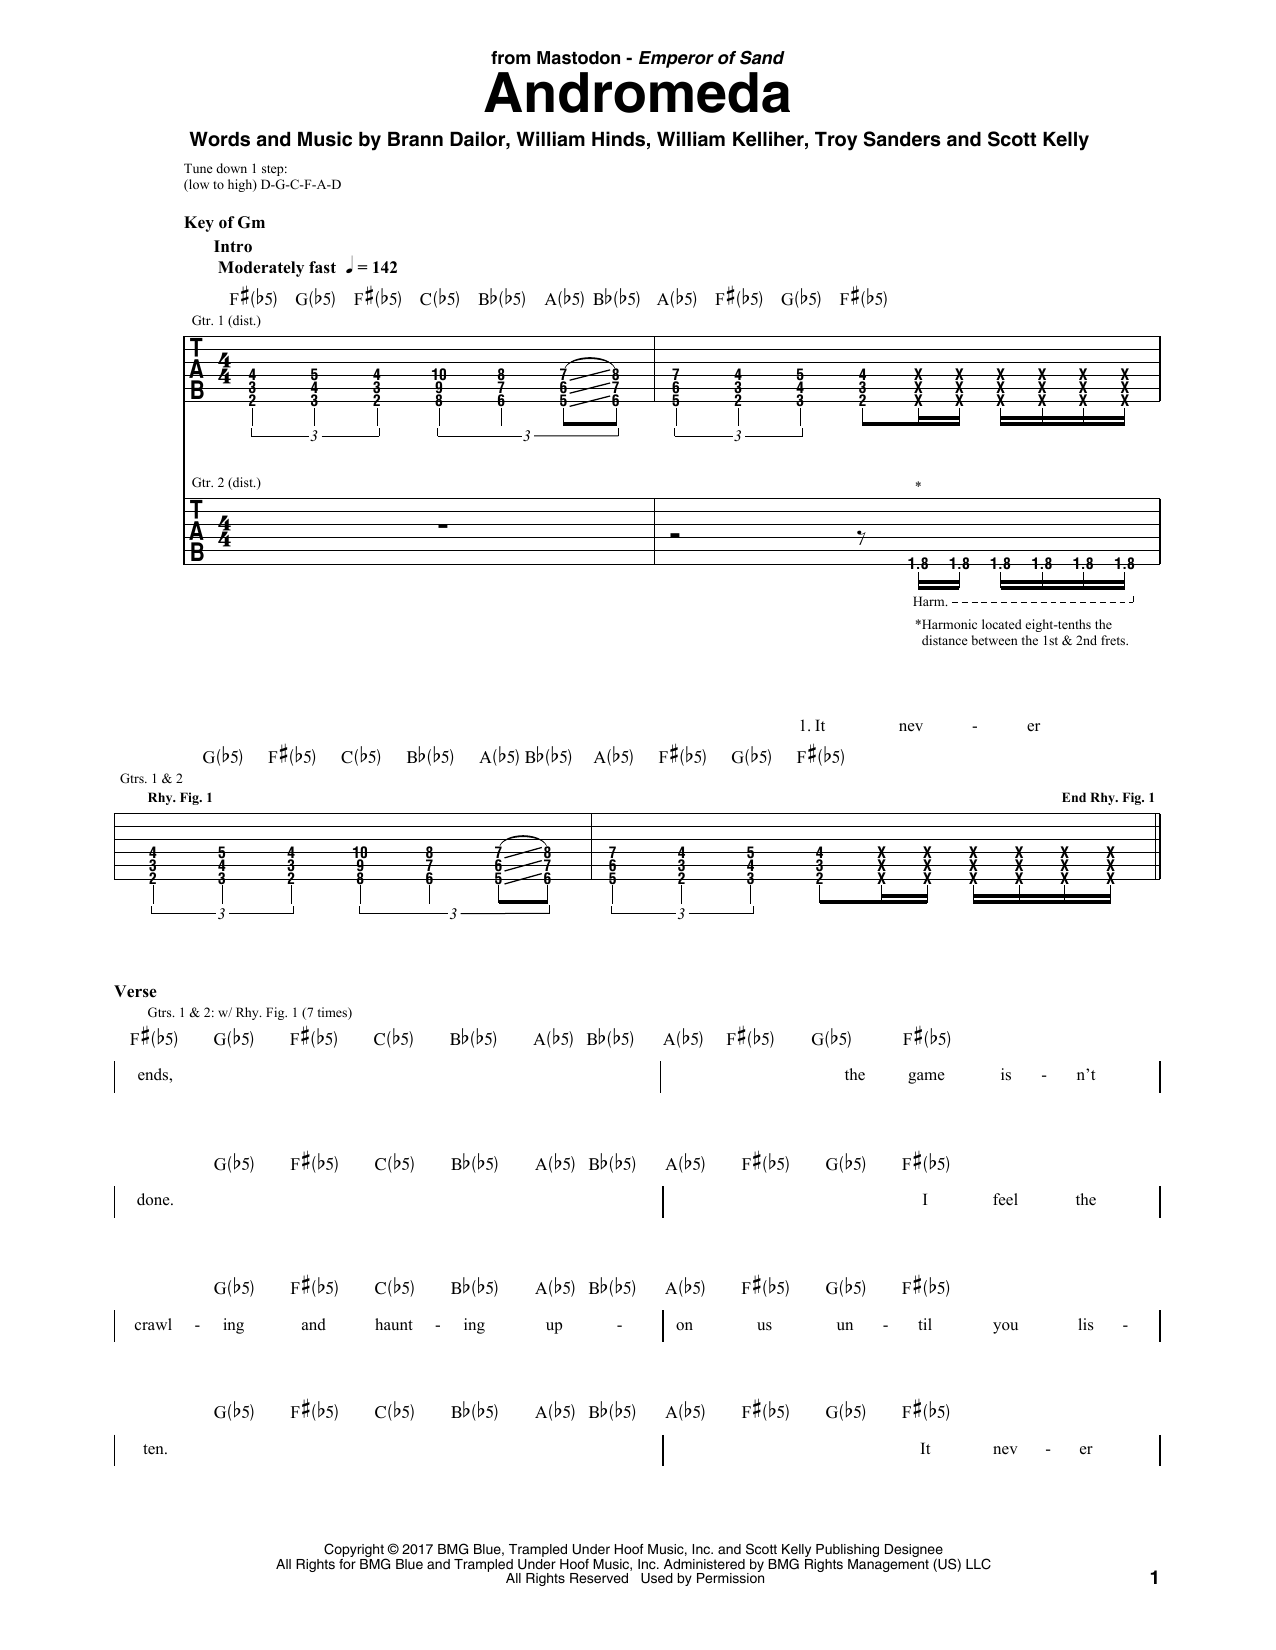 Mastodon Andromeda Sheet Music Notes & Chords for Guitar Tab - Download or Print PDF